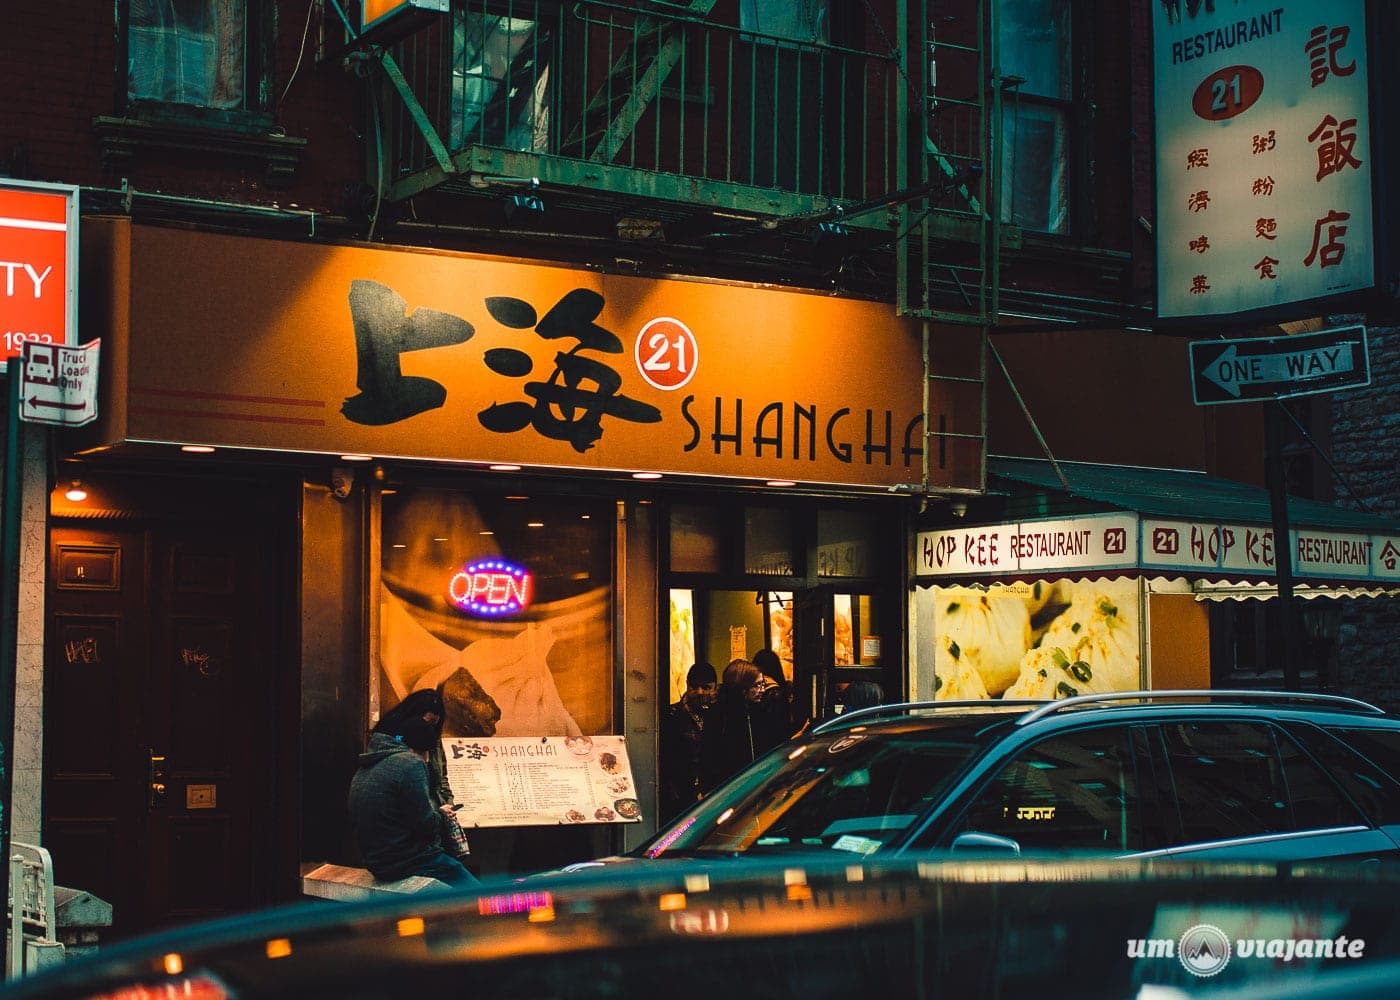 Shanghai 21 - Restaurante em Chinatown - Roteiro NYC